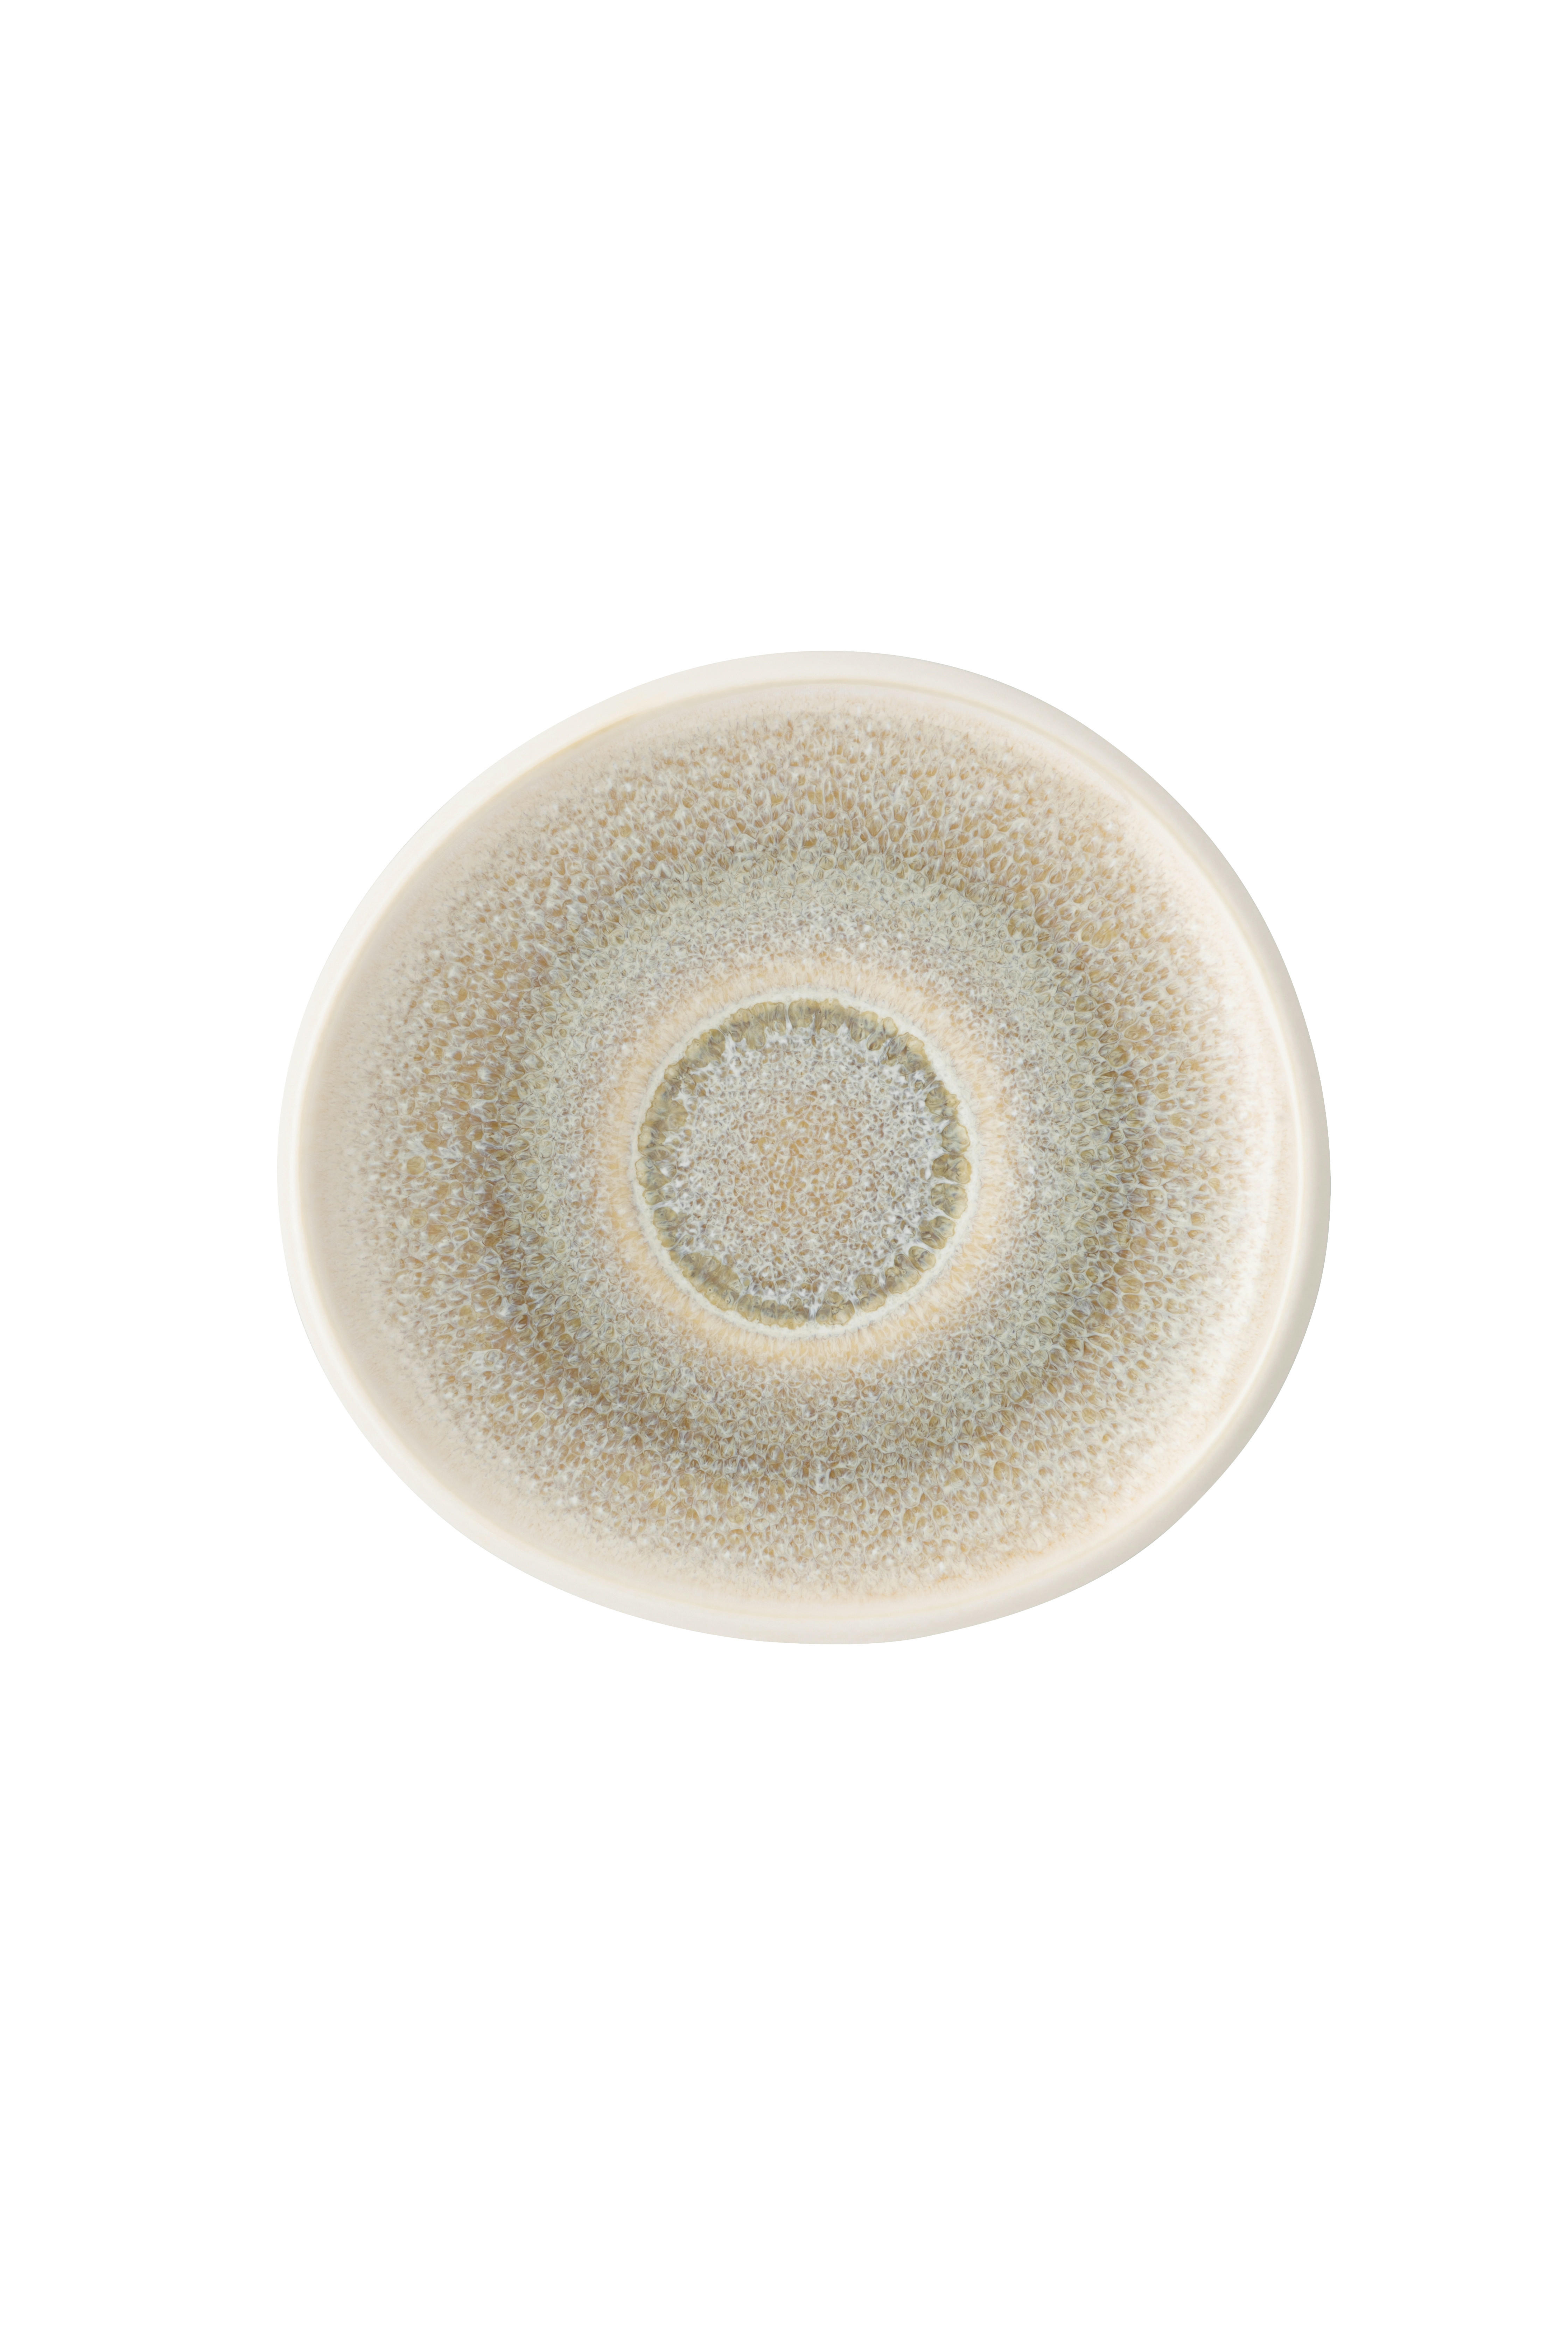 ESPRESSO-UNTERTASSE - Beige, LIFESTYLE, Keramik (11,8/11,2/1,4cm) - Rosenthal